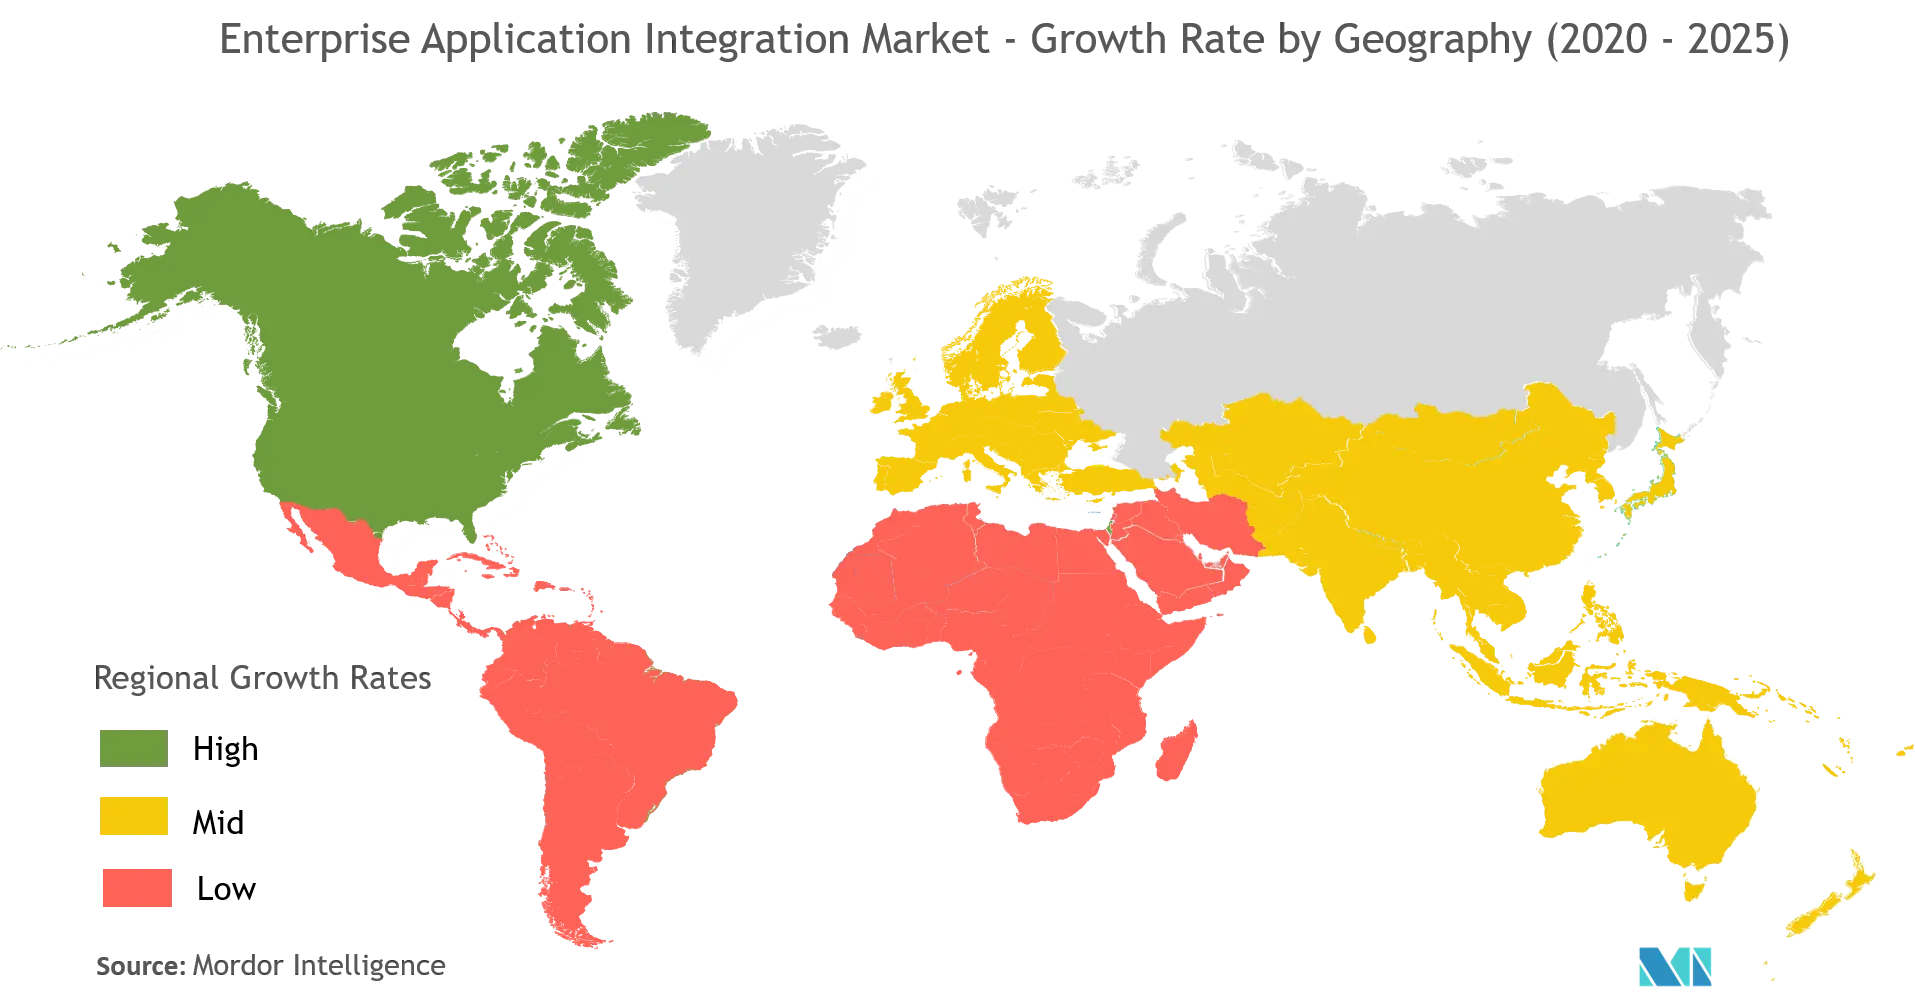 enterprise application integration market share